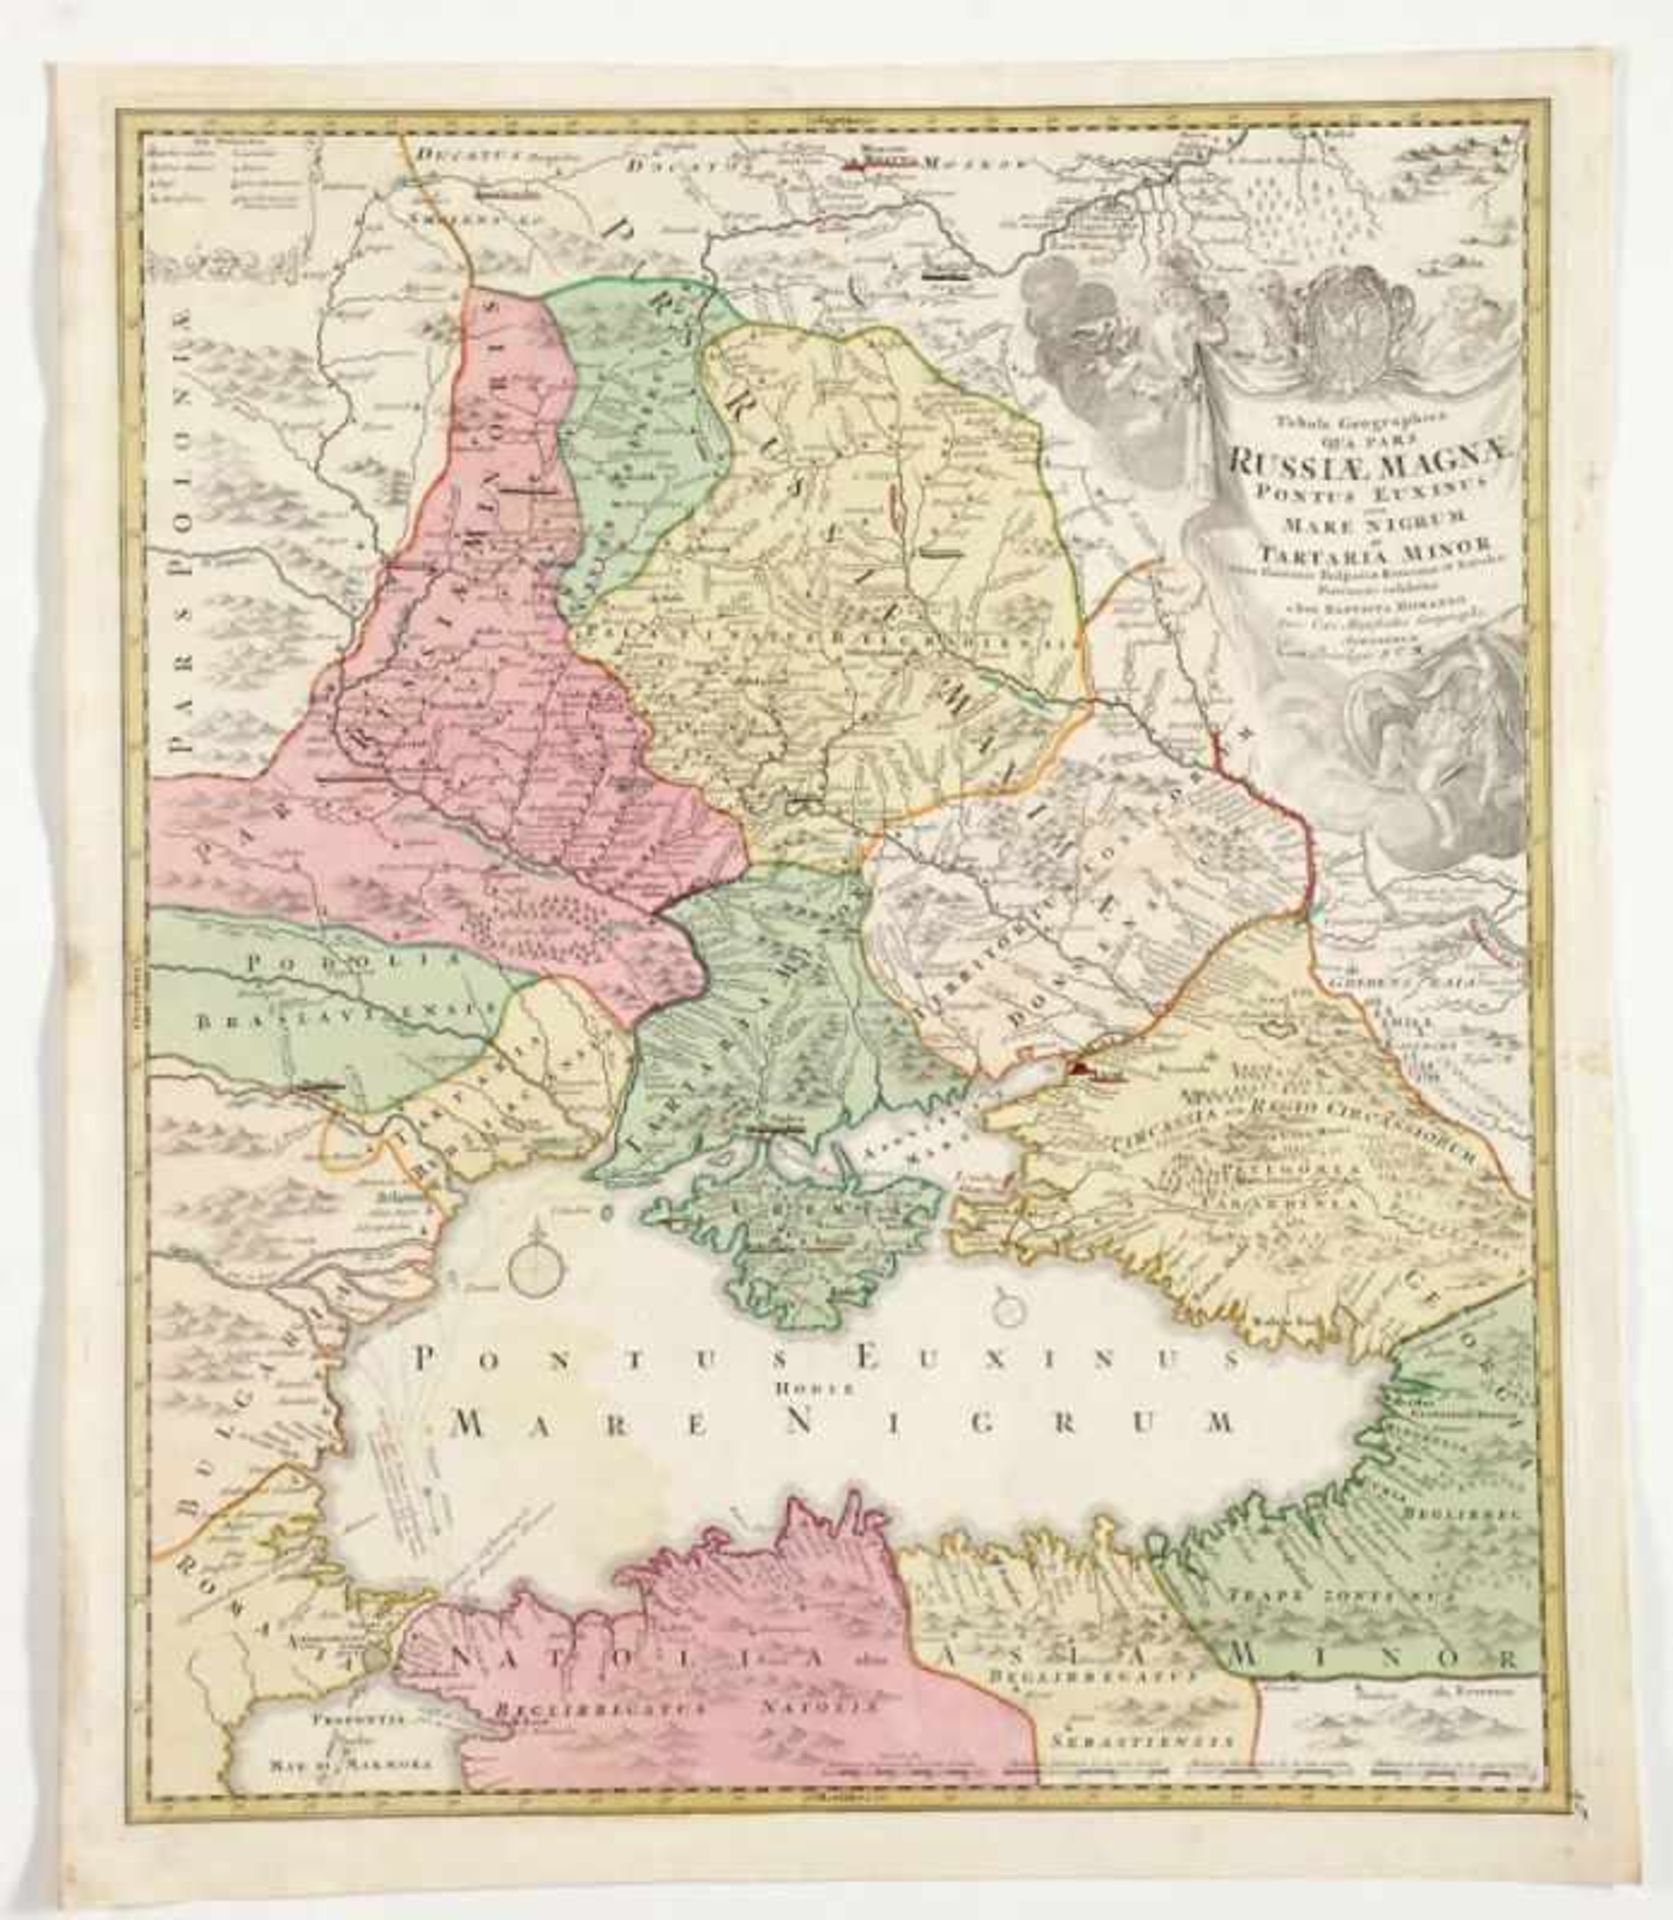 Johann Baptist Homann1664 Kambach - 1724 Nürnberg - "Tabula Geographica qua Pars Russiae Magnae" -